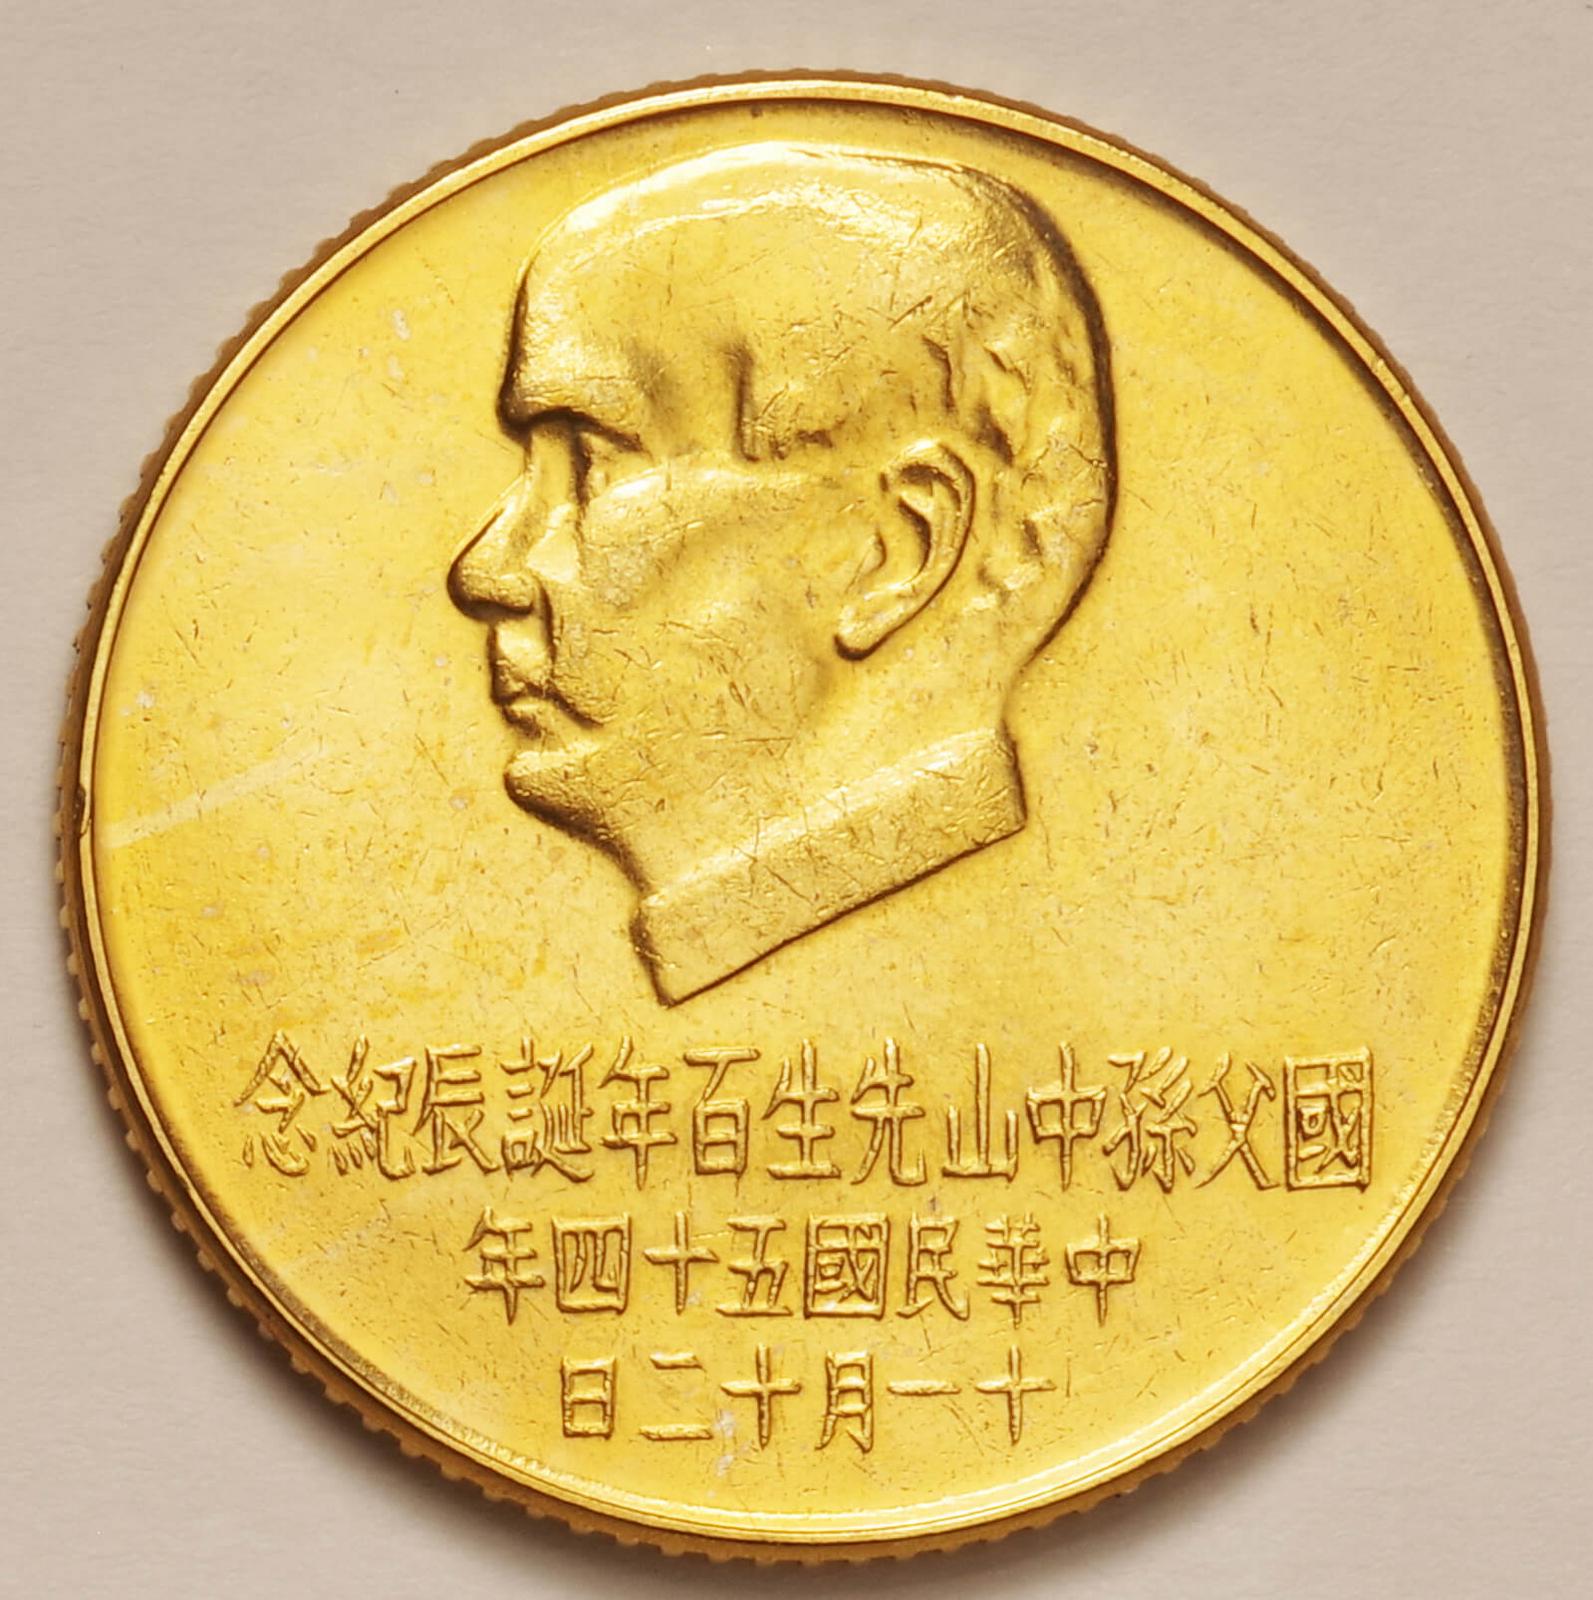 孫中山 生誕 120年 記念 金メダル - 旧貨幣/金貨/銀貨/記念硬貨